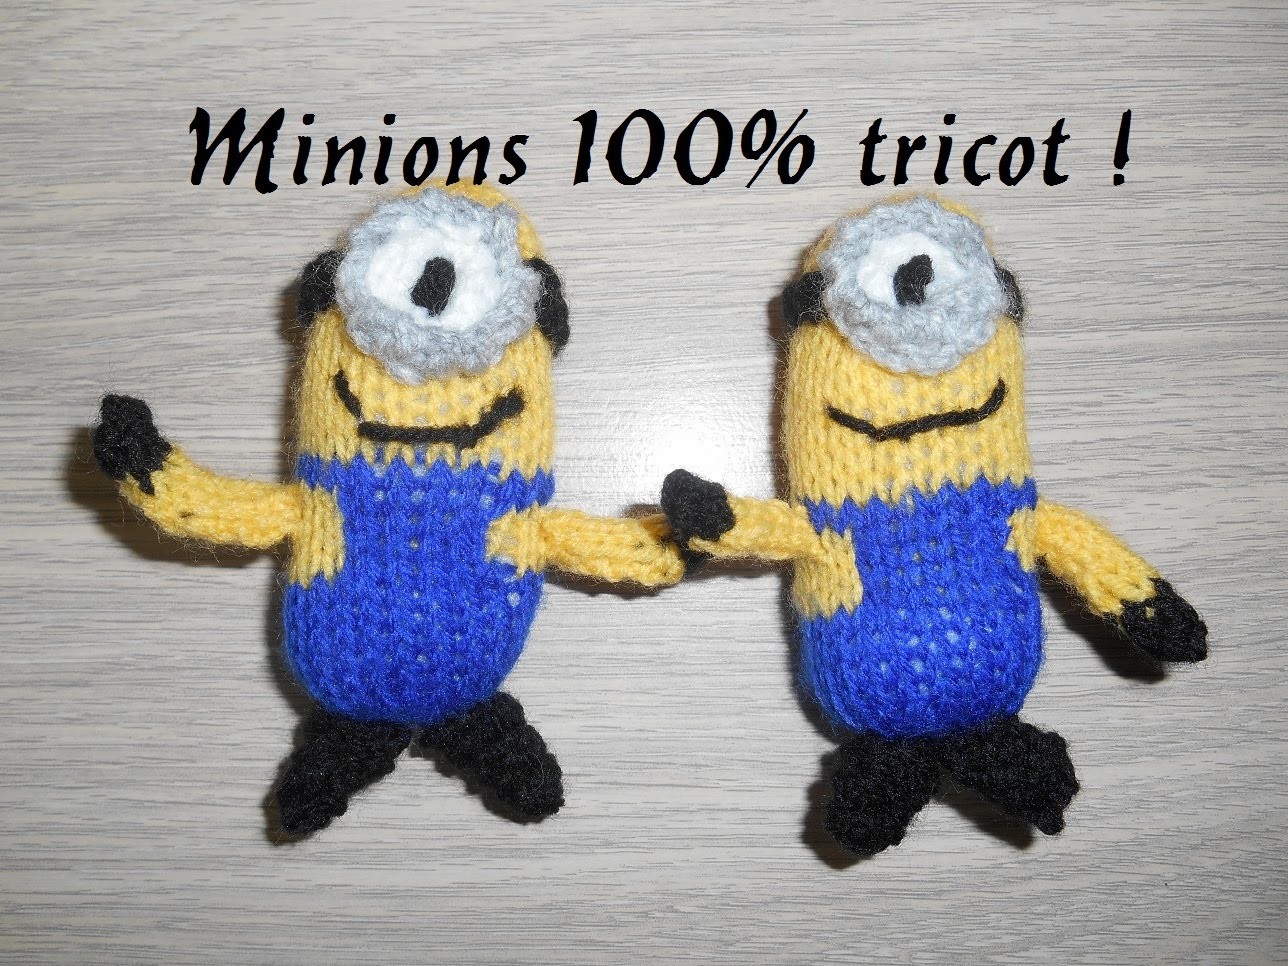 Tricoter des minions facile, knitting minion easy, 100% tricot !